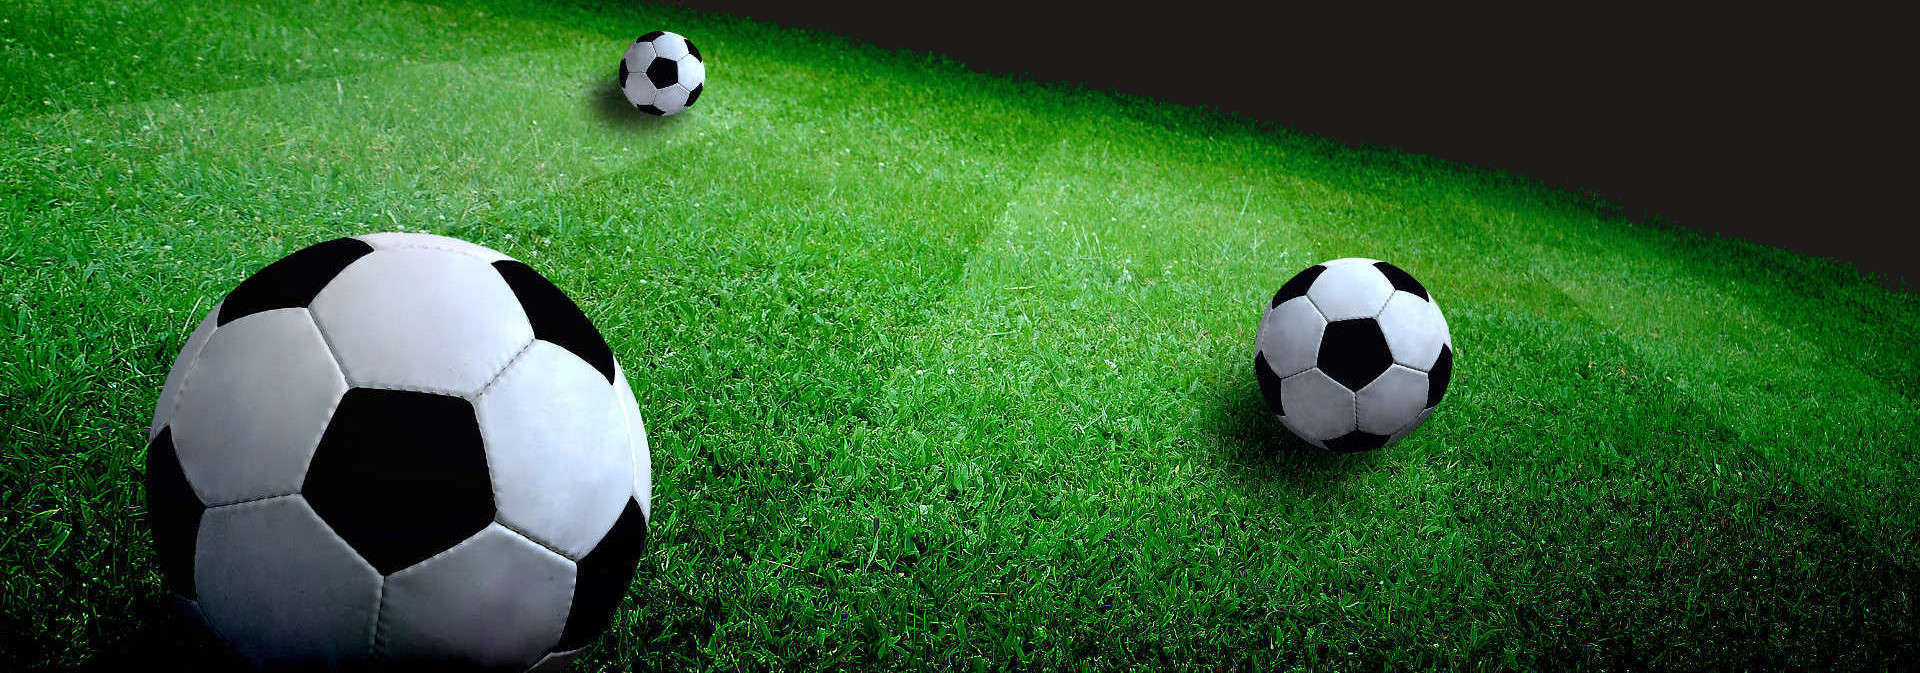 https://www.soccer-trainer.fr/images/entrainement-football-ballons.jpg